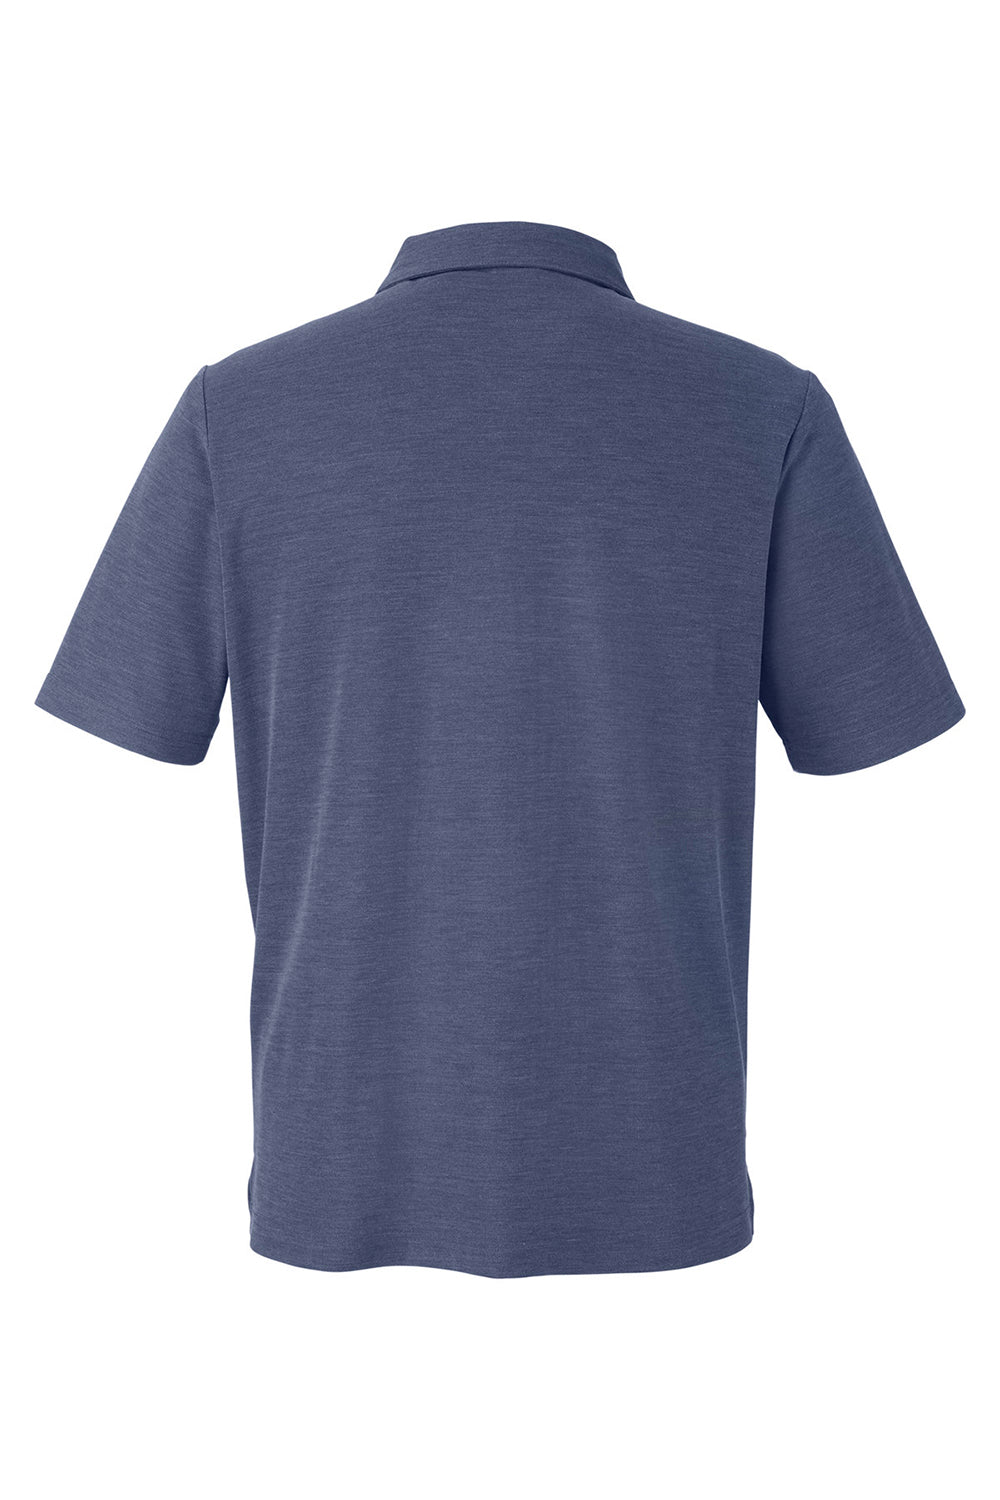 Core 365 CE112 Mens Fusion ChromaSoft Performance Moisture Wicking Short Sleeve Polo Shirt Heather Classic Navy Blue Flat Back